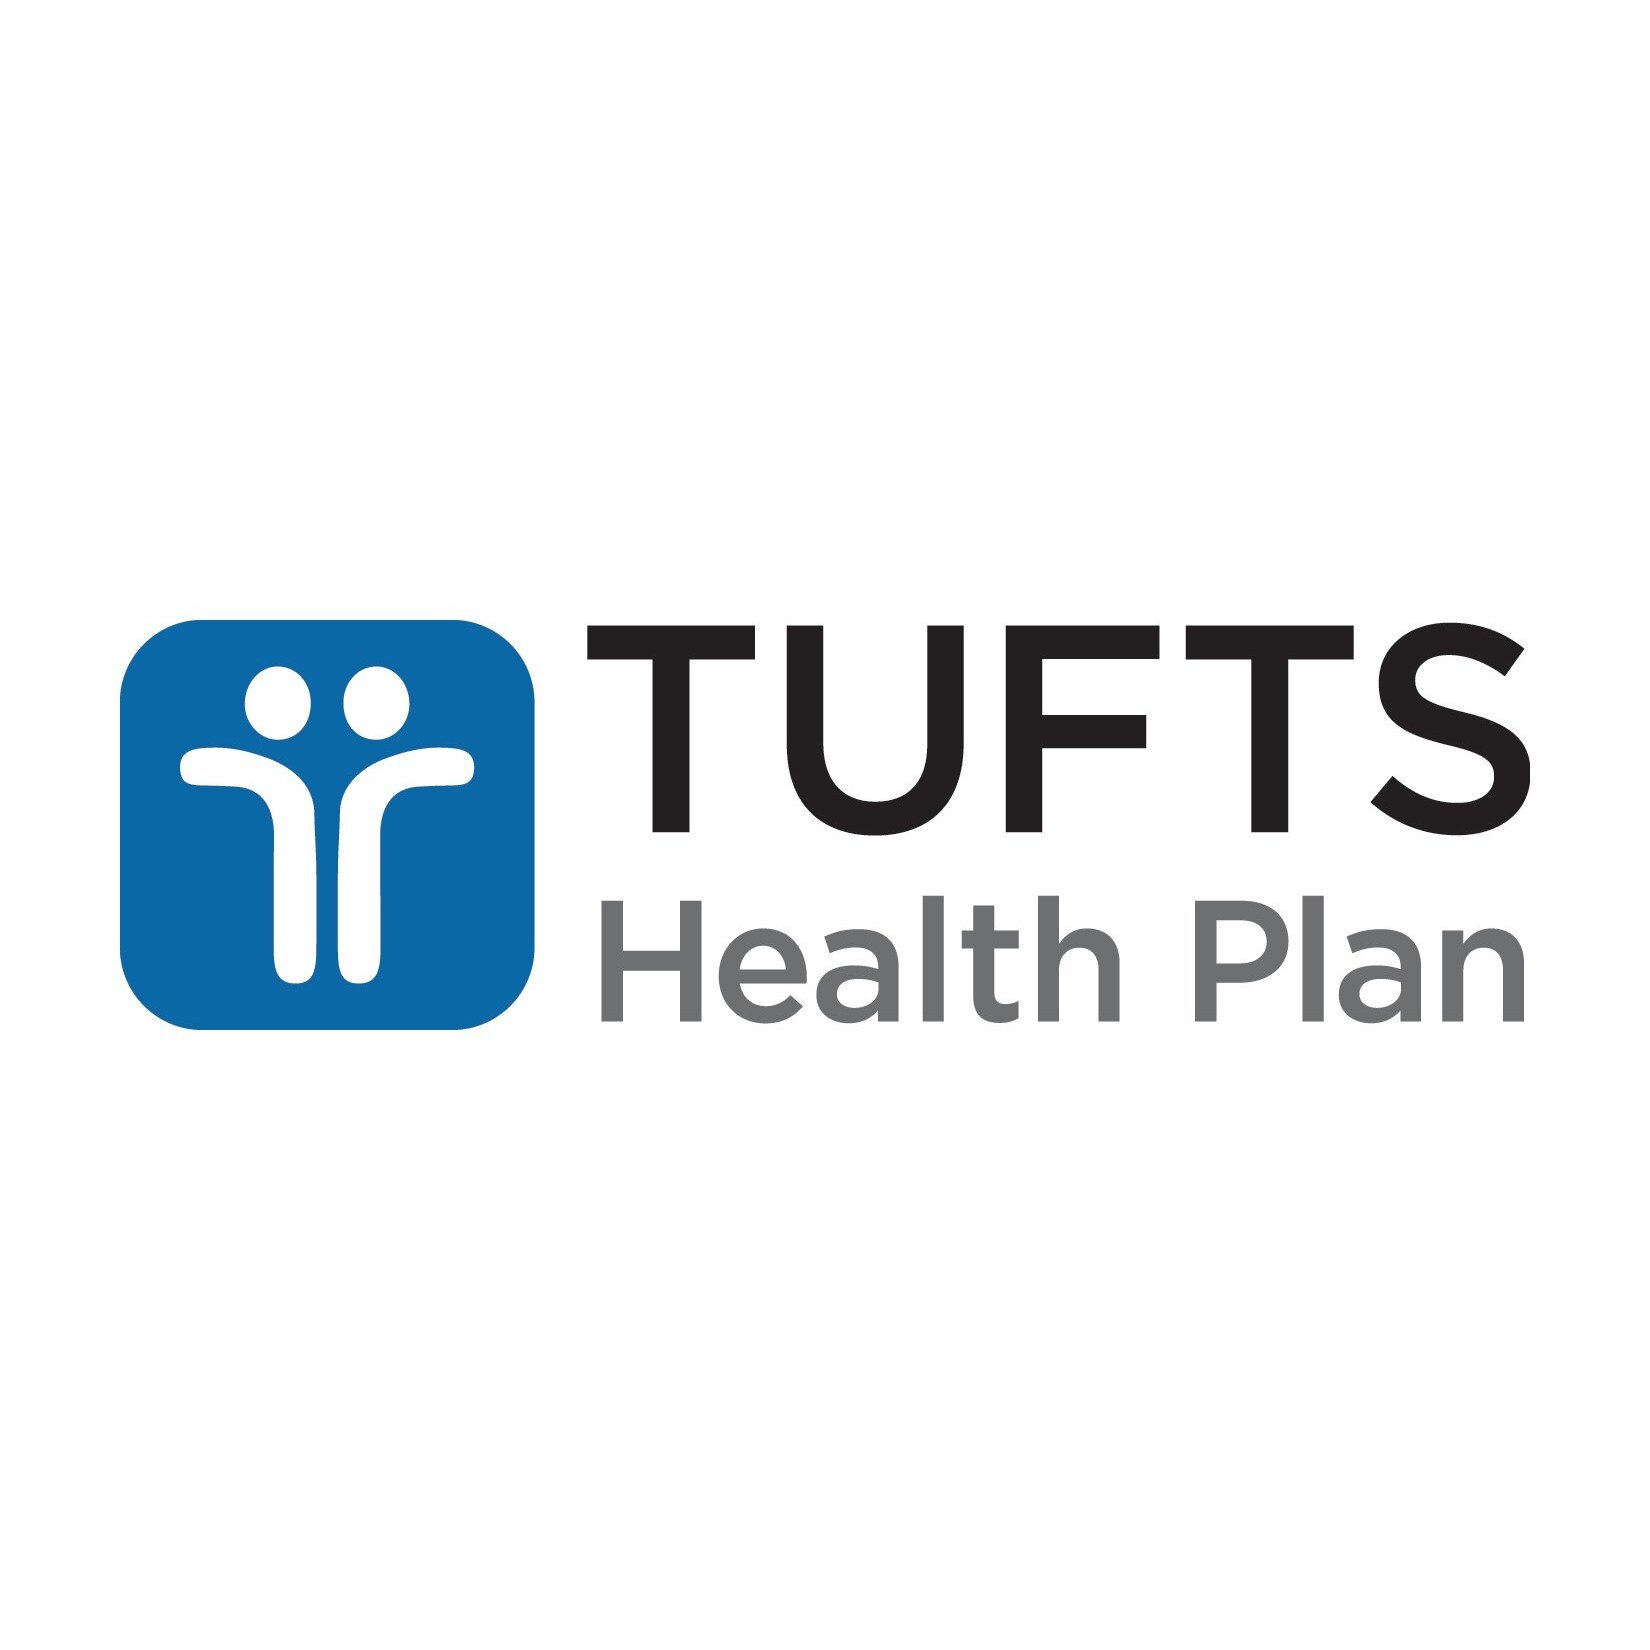 Tufts Health Plan